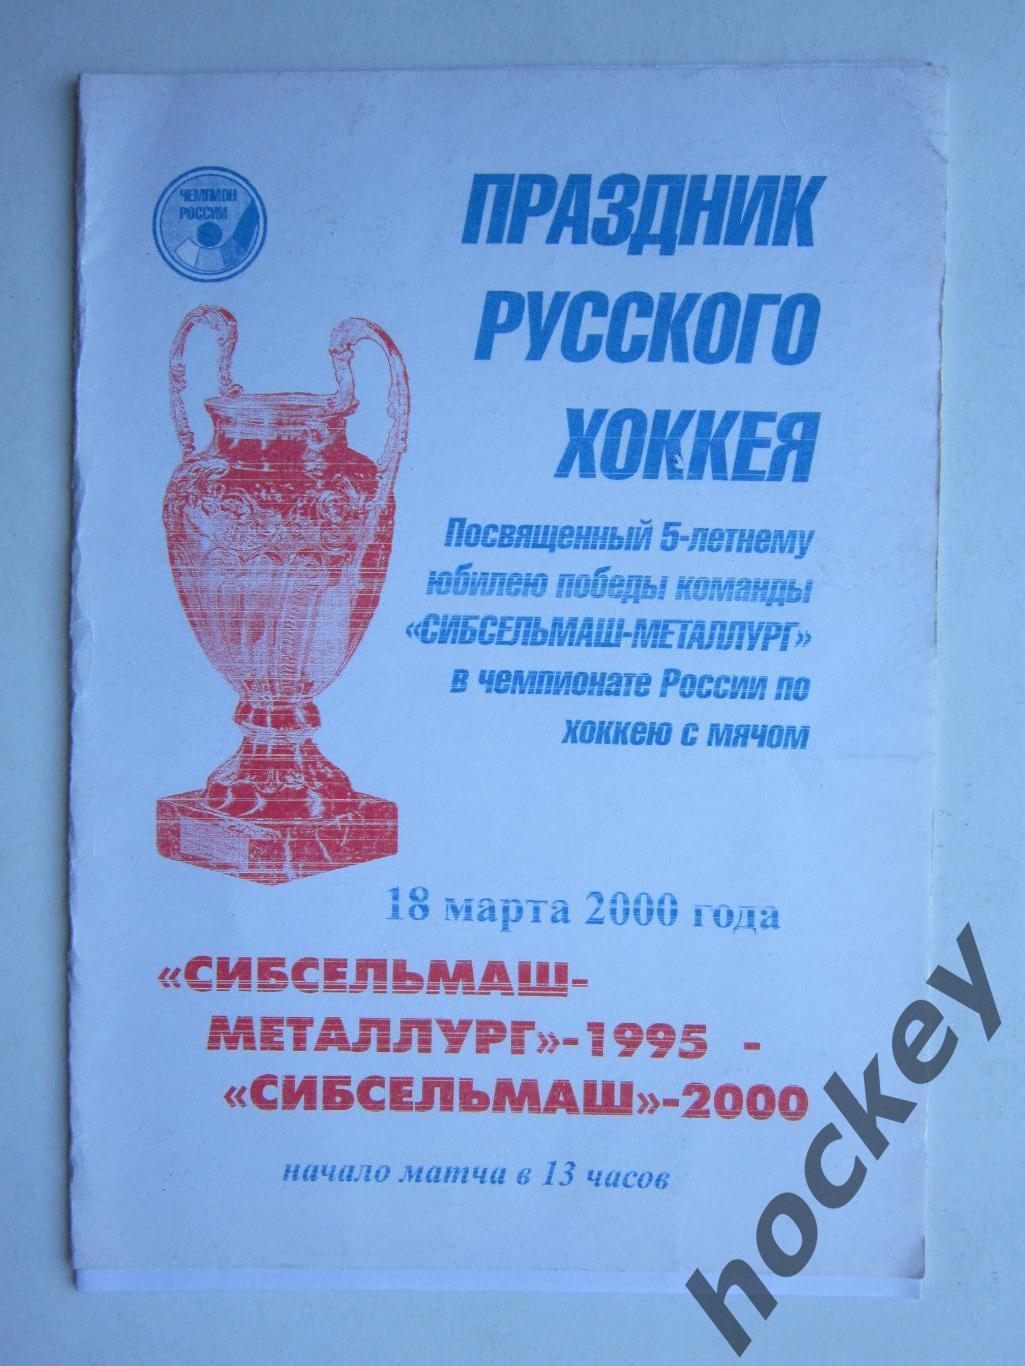 Сибсельмаш-Металлург-1995 Новосибирск - Сибсельмаш-2000 18.03.2000. Праздник